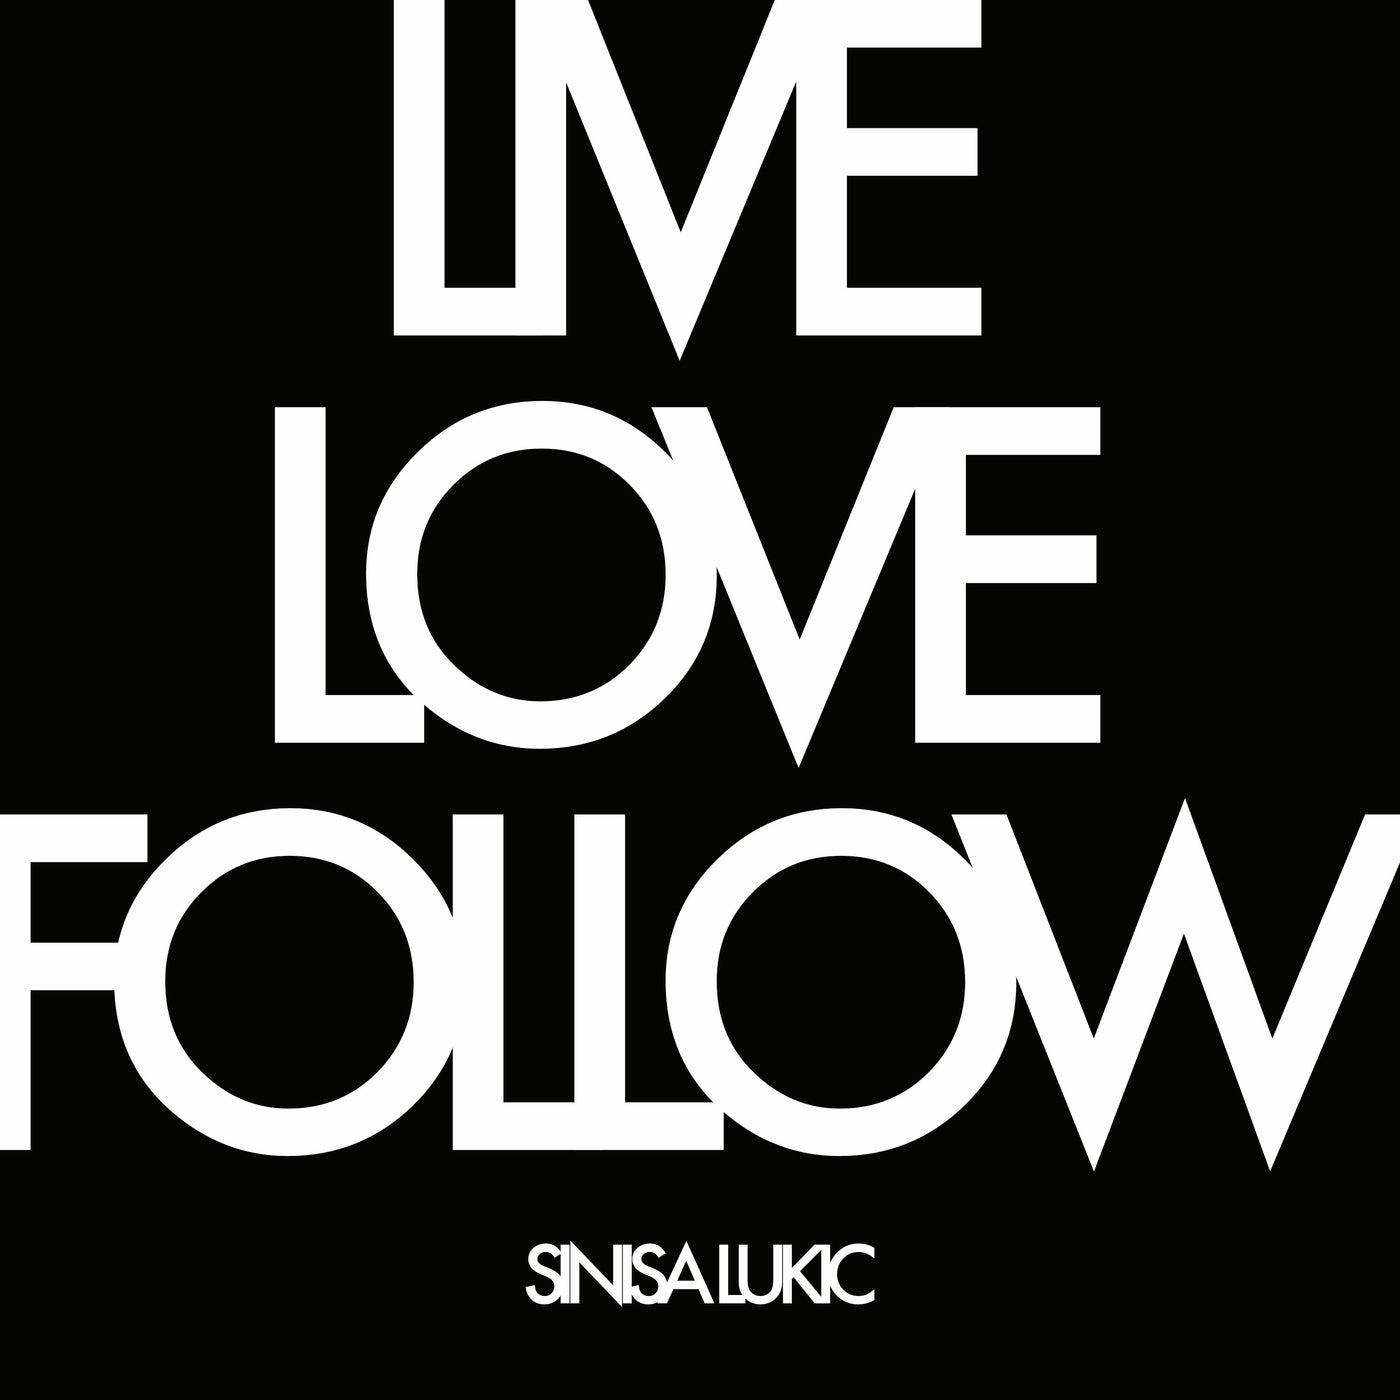 Live Love Follow